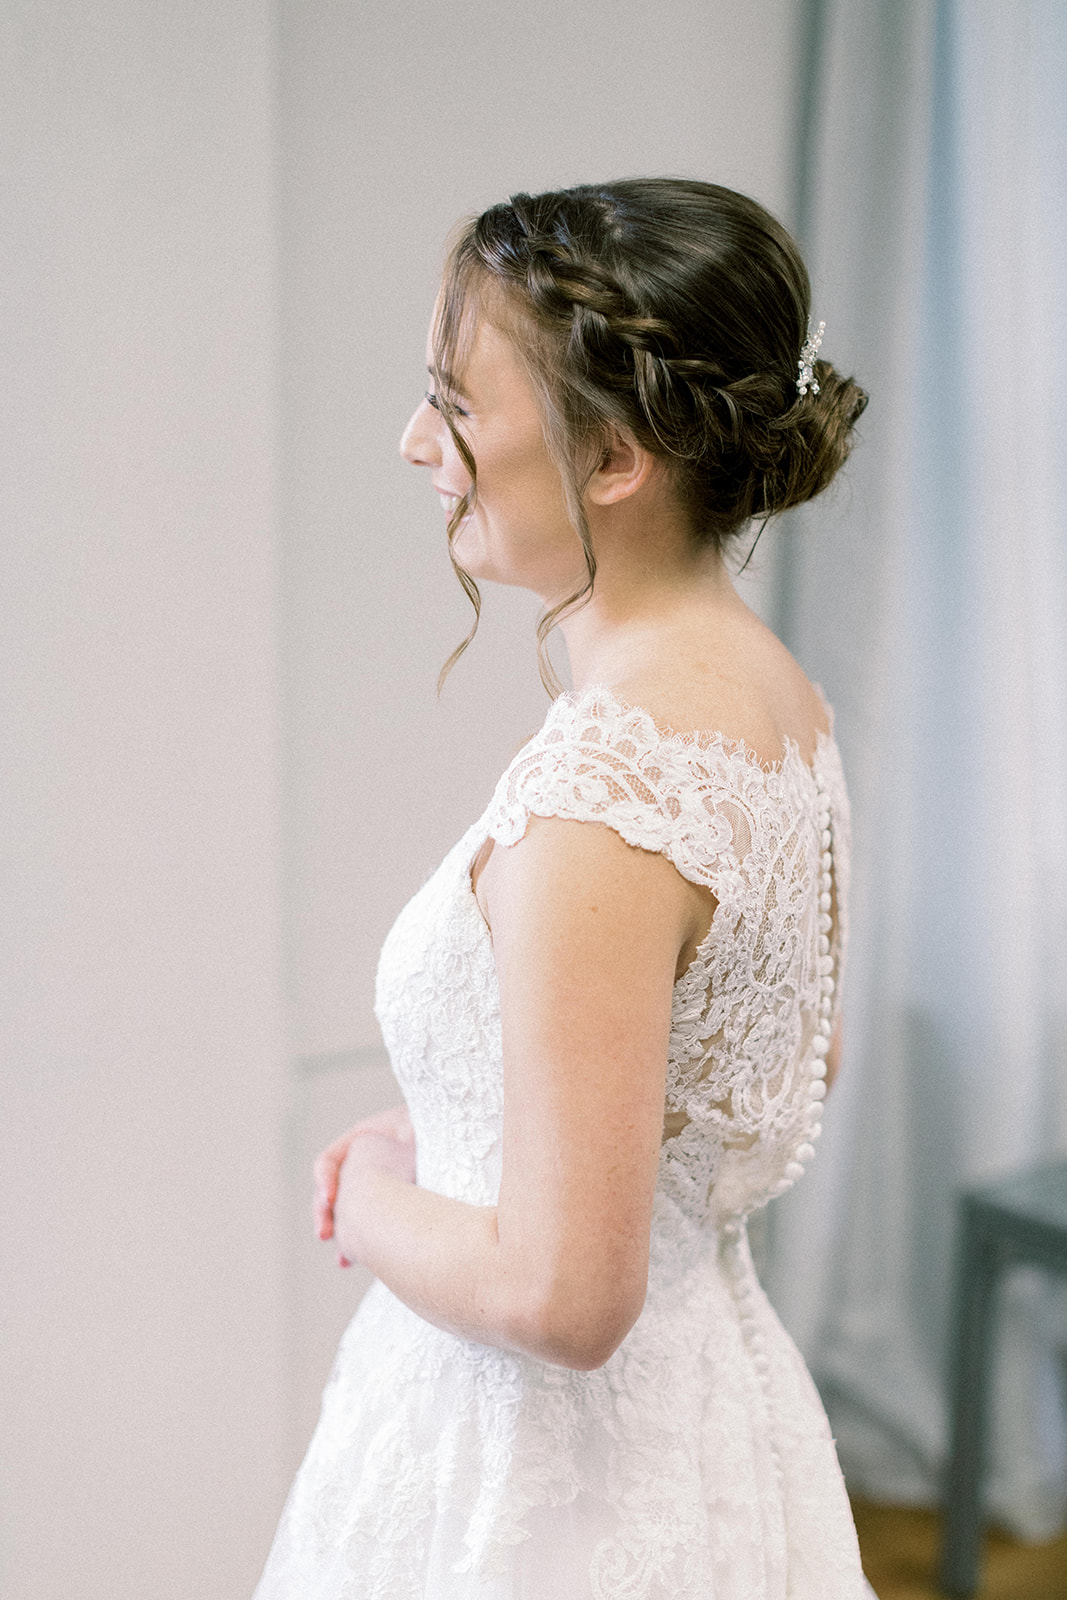 Pennsylvania wedding photographer captures bride wearing wedding dress